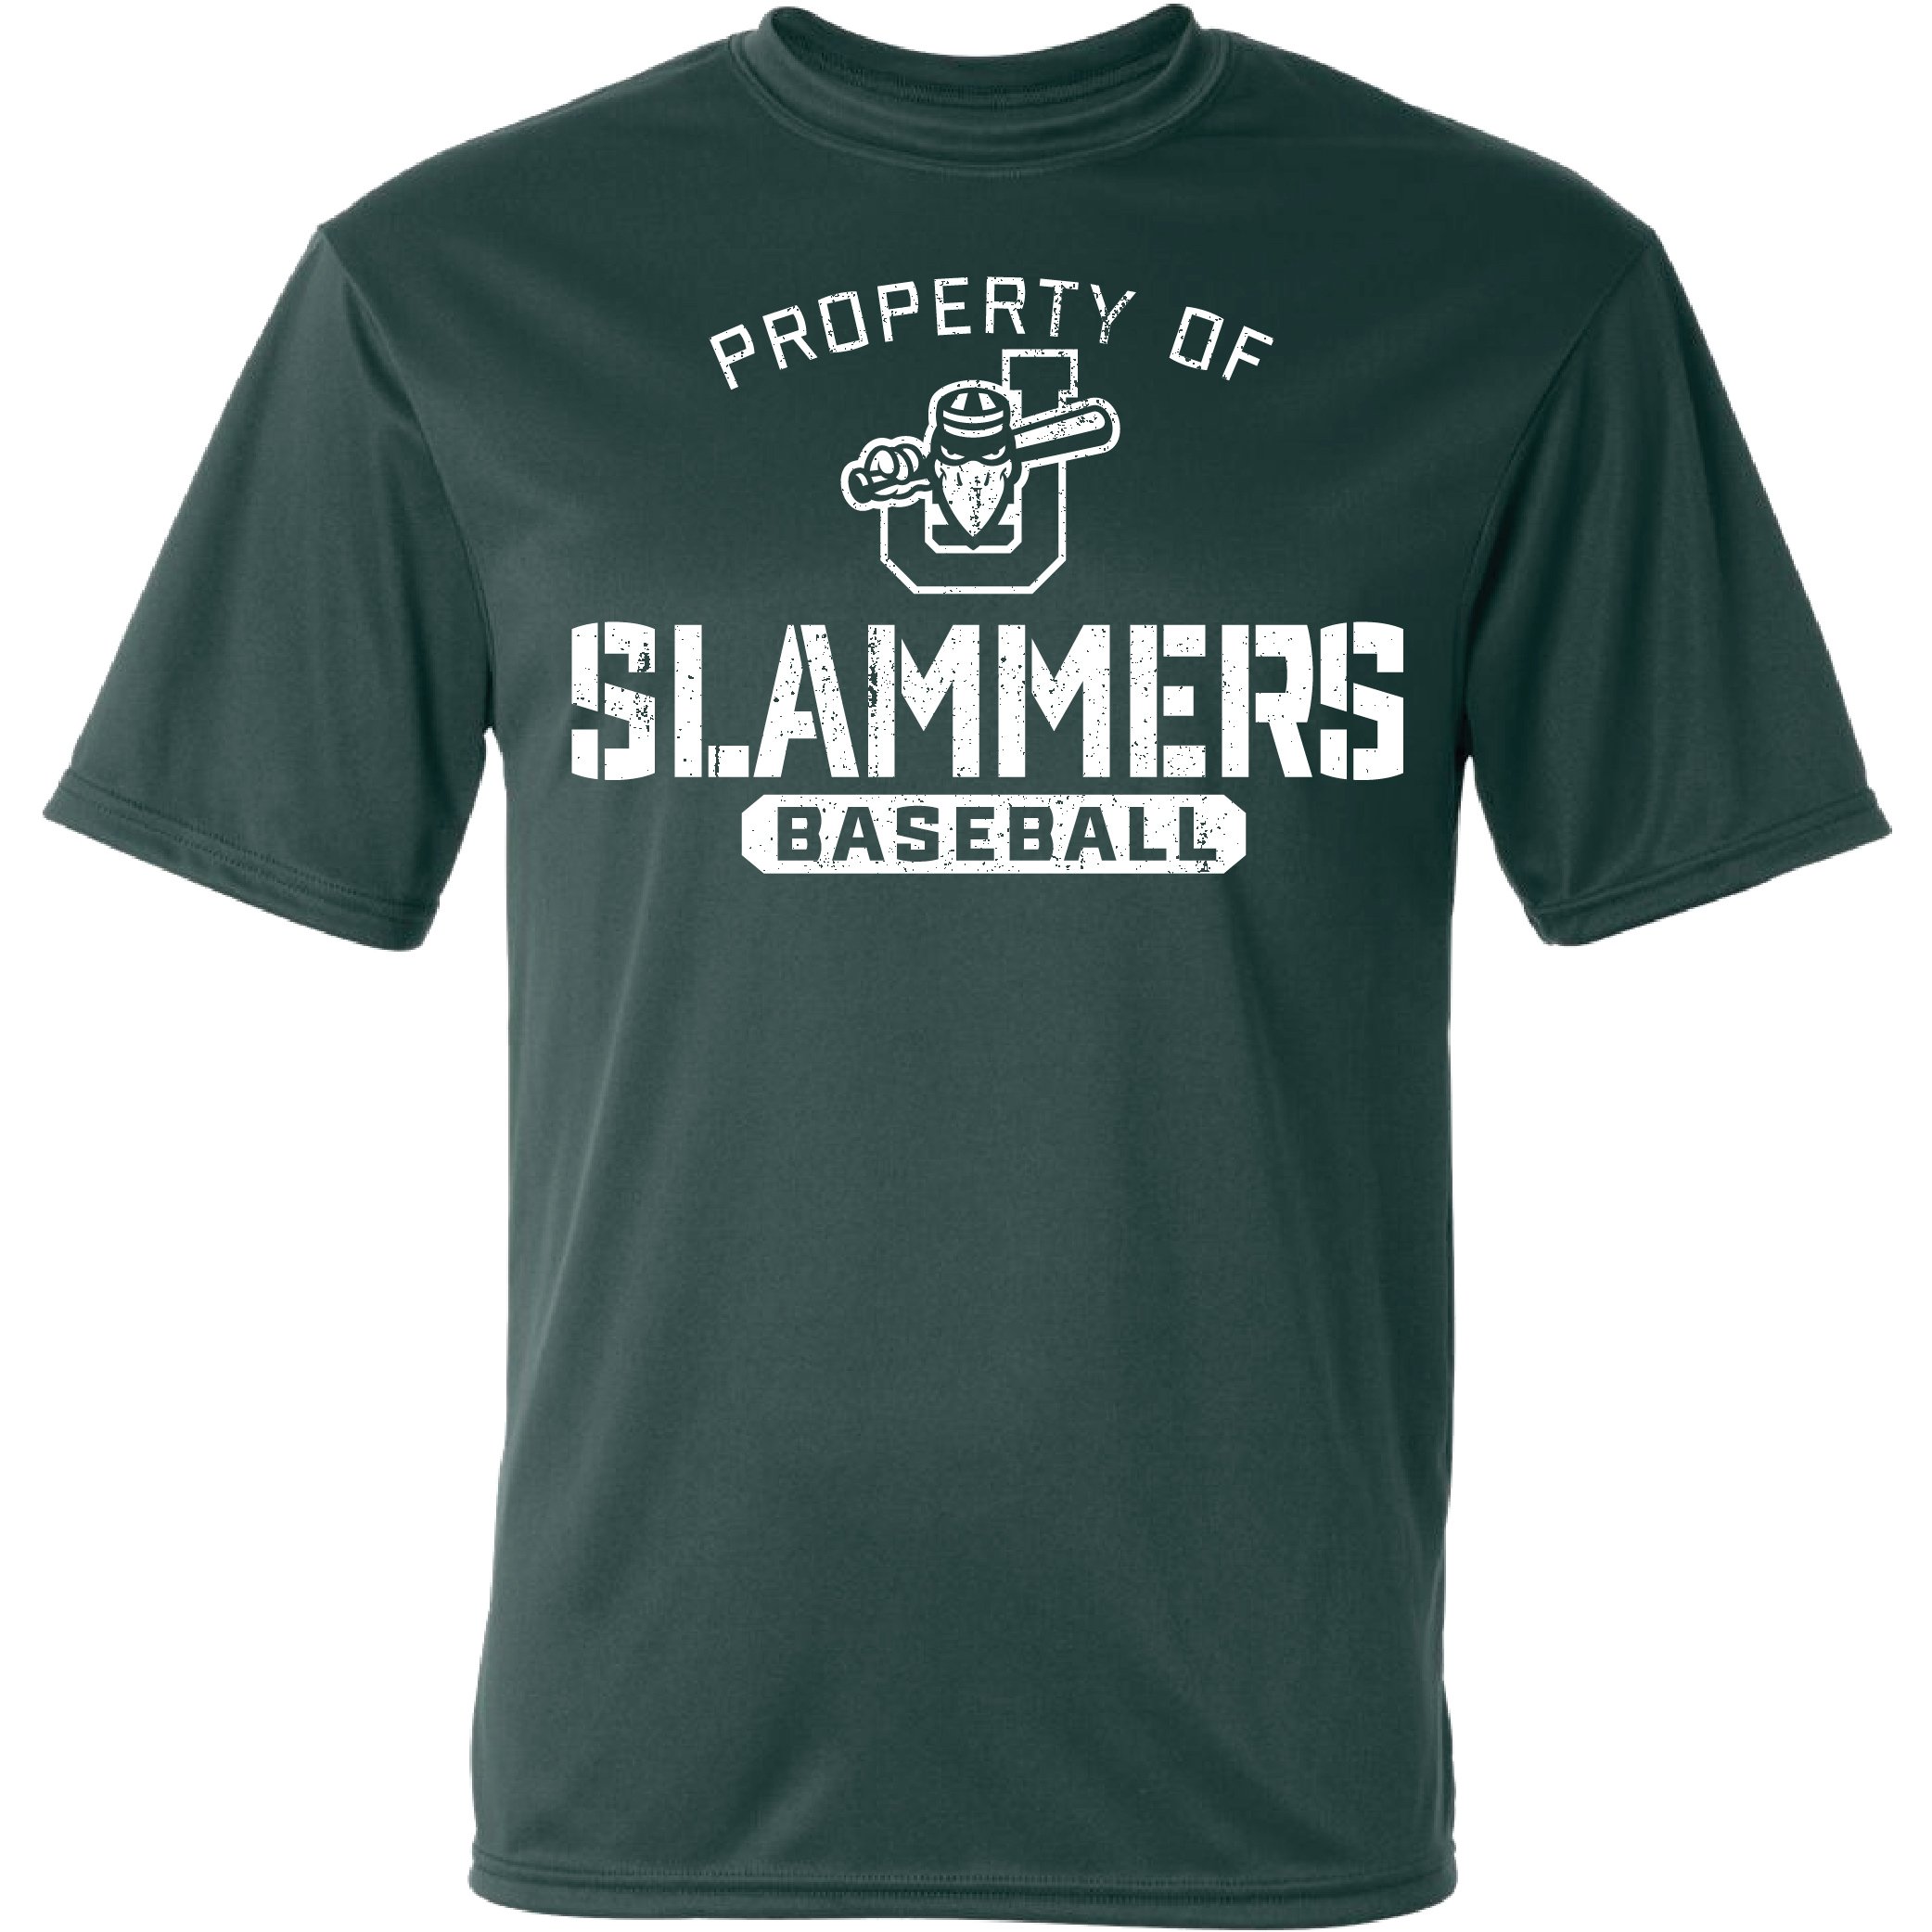 T-Shirts — Joliet Slammers Online Store